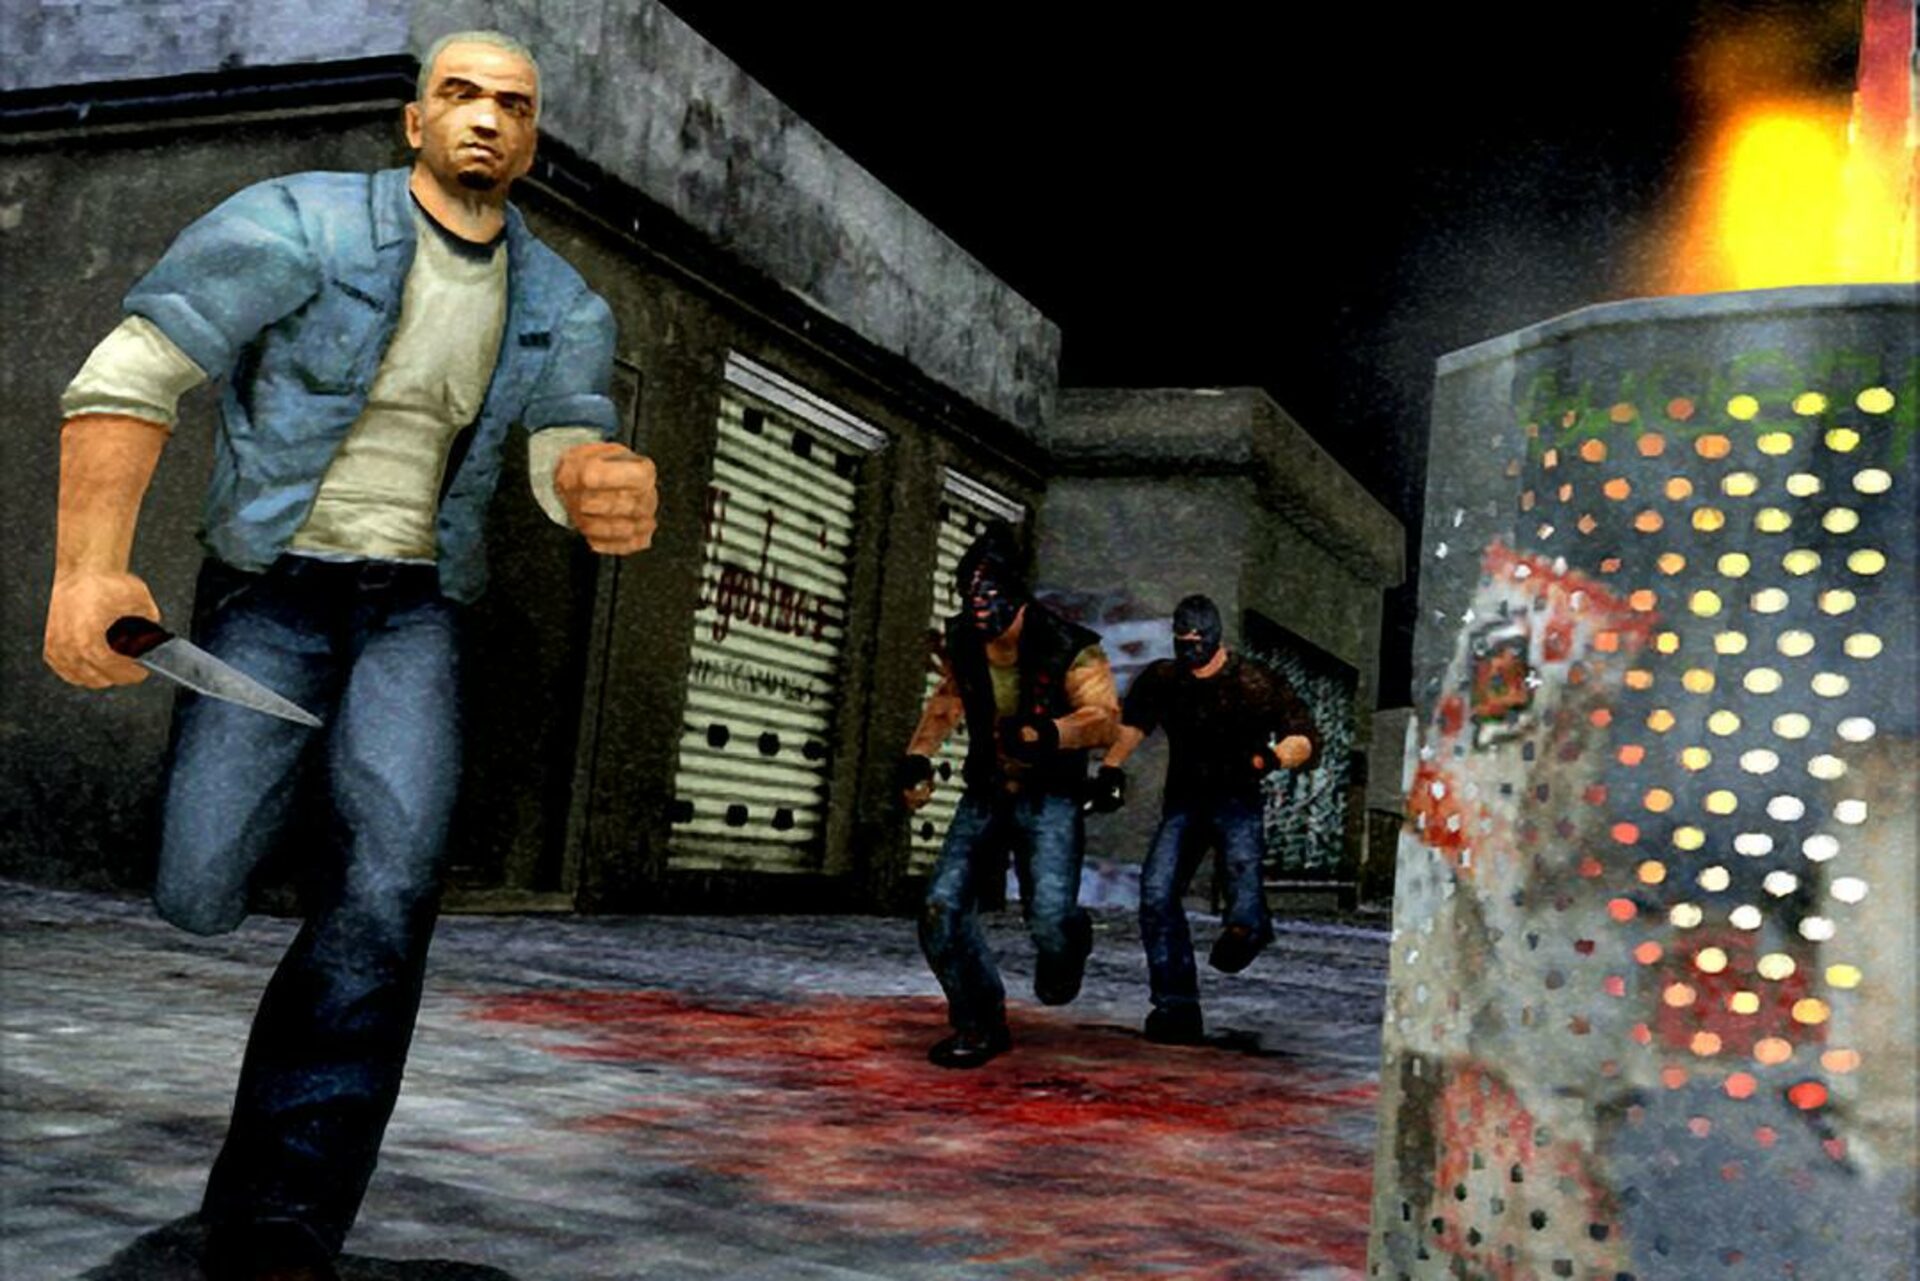 Retour sur Manhunt, le jeu interdit made in Rockstar Lageekroom